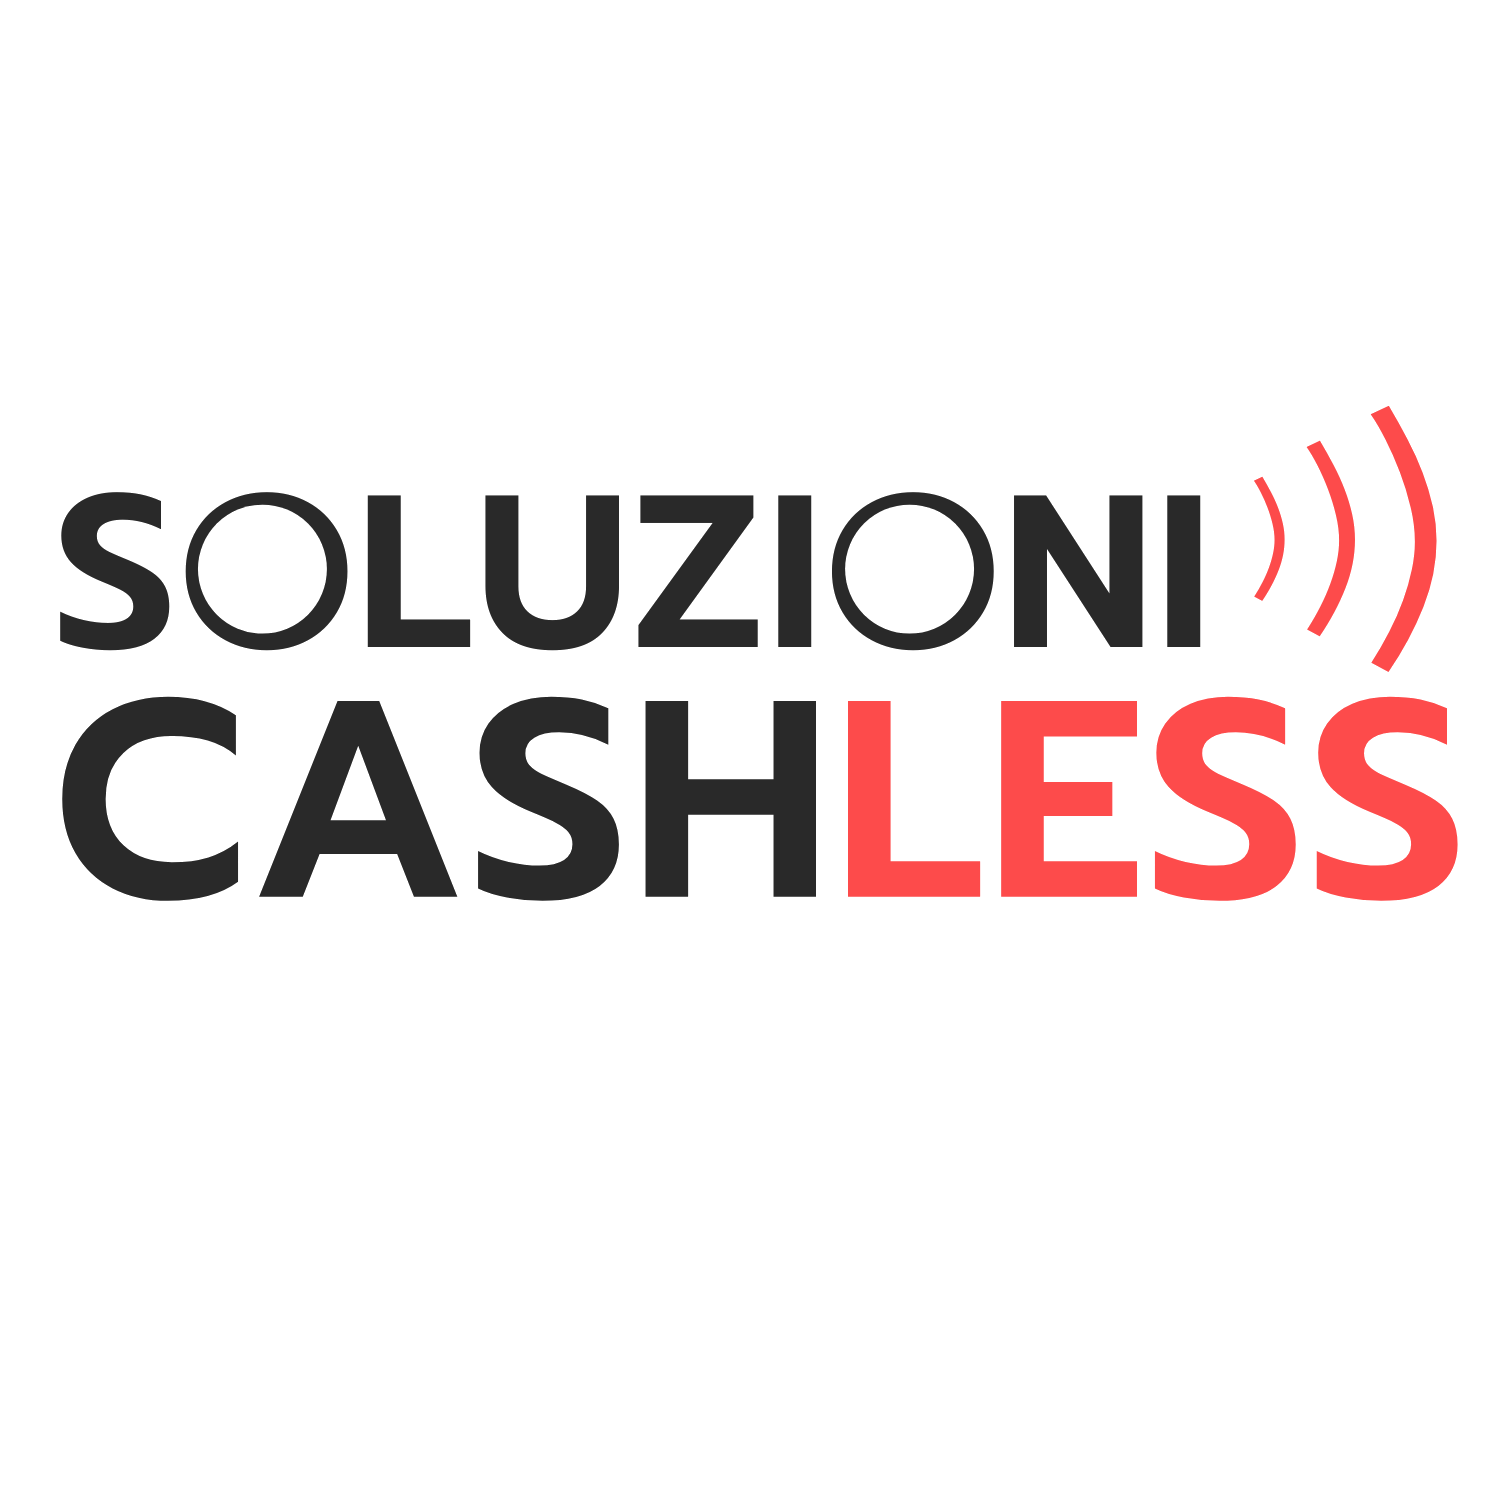 Our partner soluzioni cashless